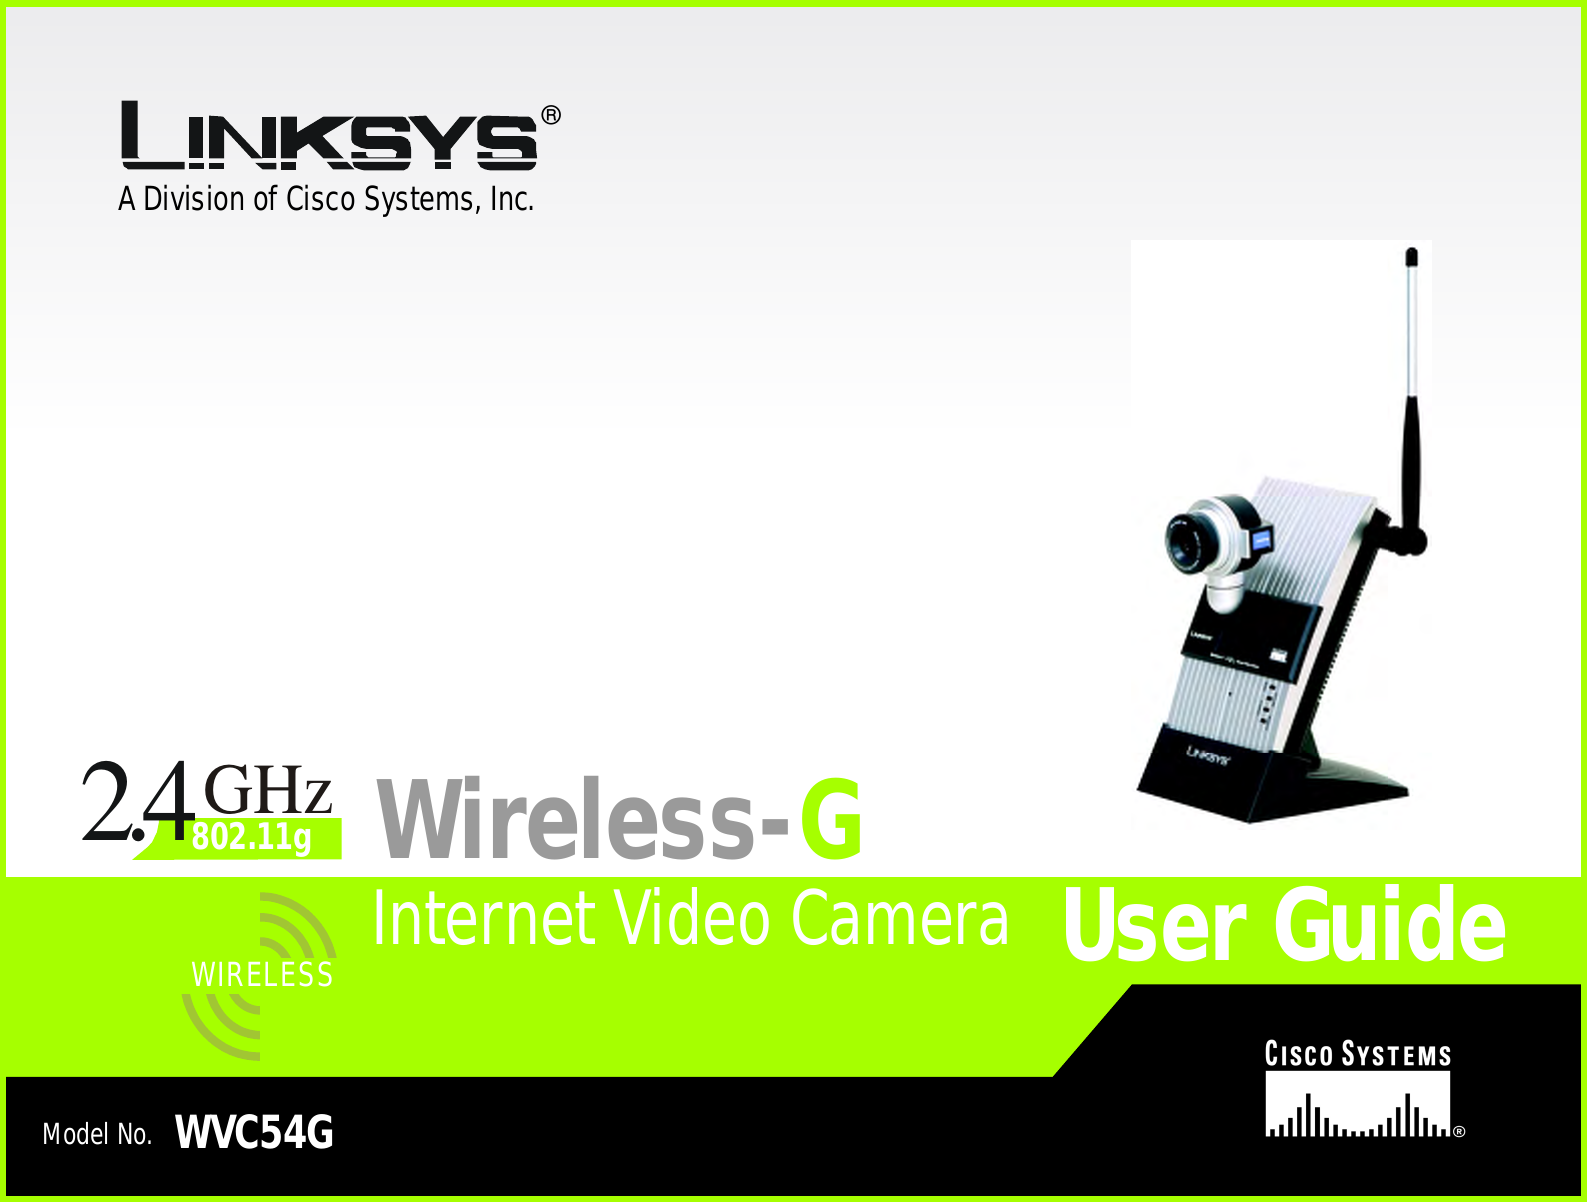 A Division of Cisco Systems, Inc.®Model No.Internet Video CameraWireless-GWVC54GUser GuideWIRELESSGHz2.4802.11g